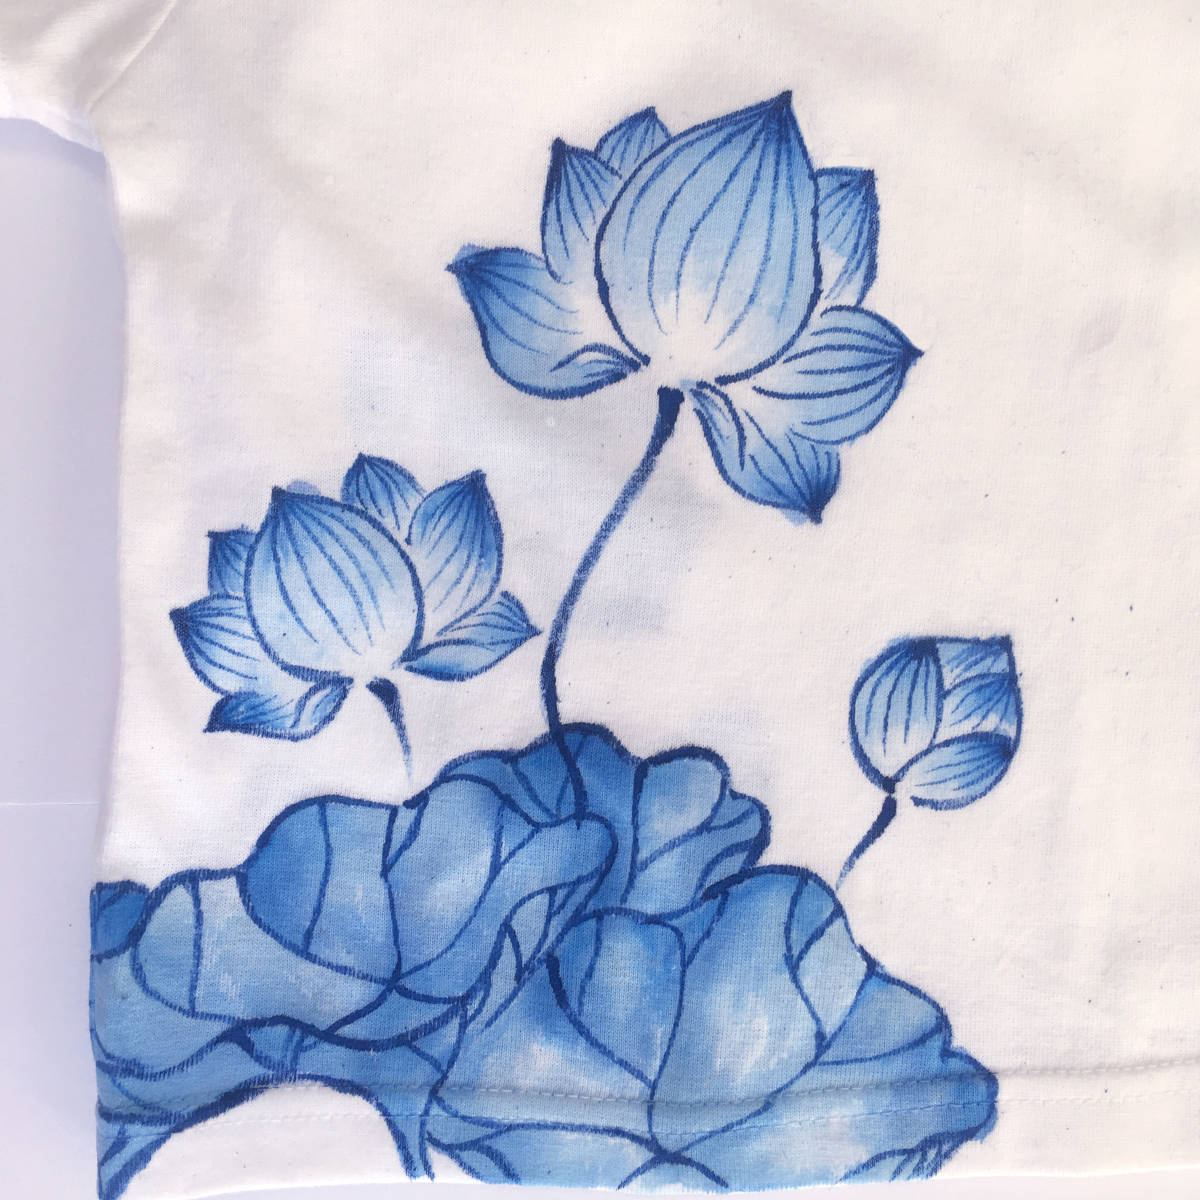  Kids T-shirt 150 size white lotus pattern T-shirt hand ...... lotus. floral print T-shirt short sleeves peace pattern Japanese style retro hand made 